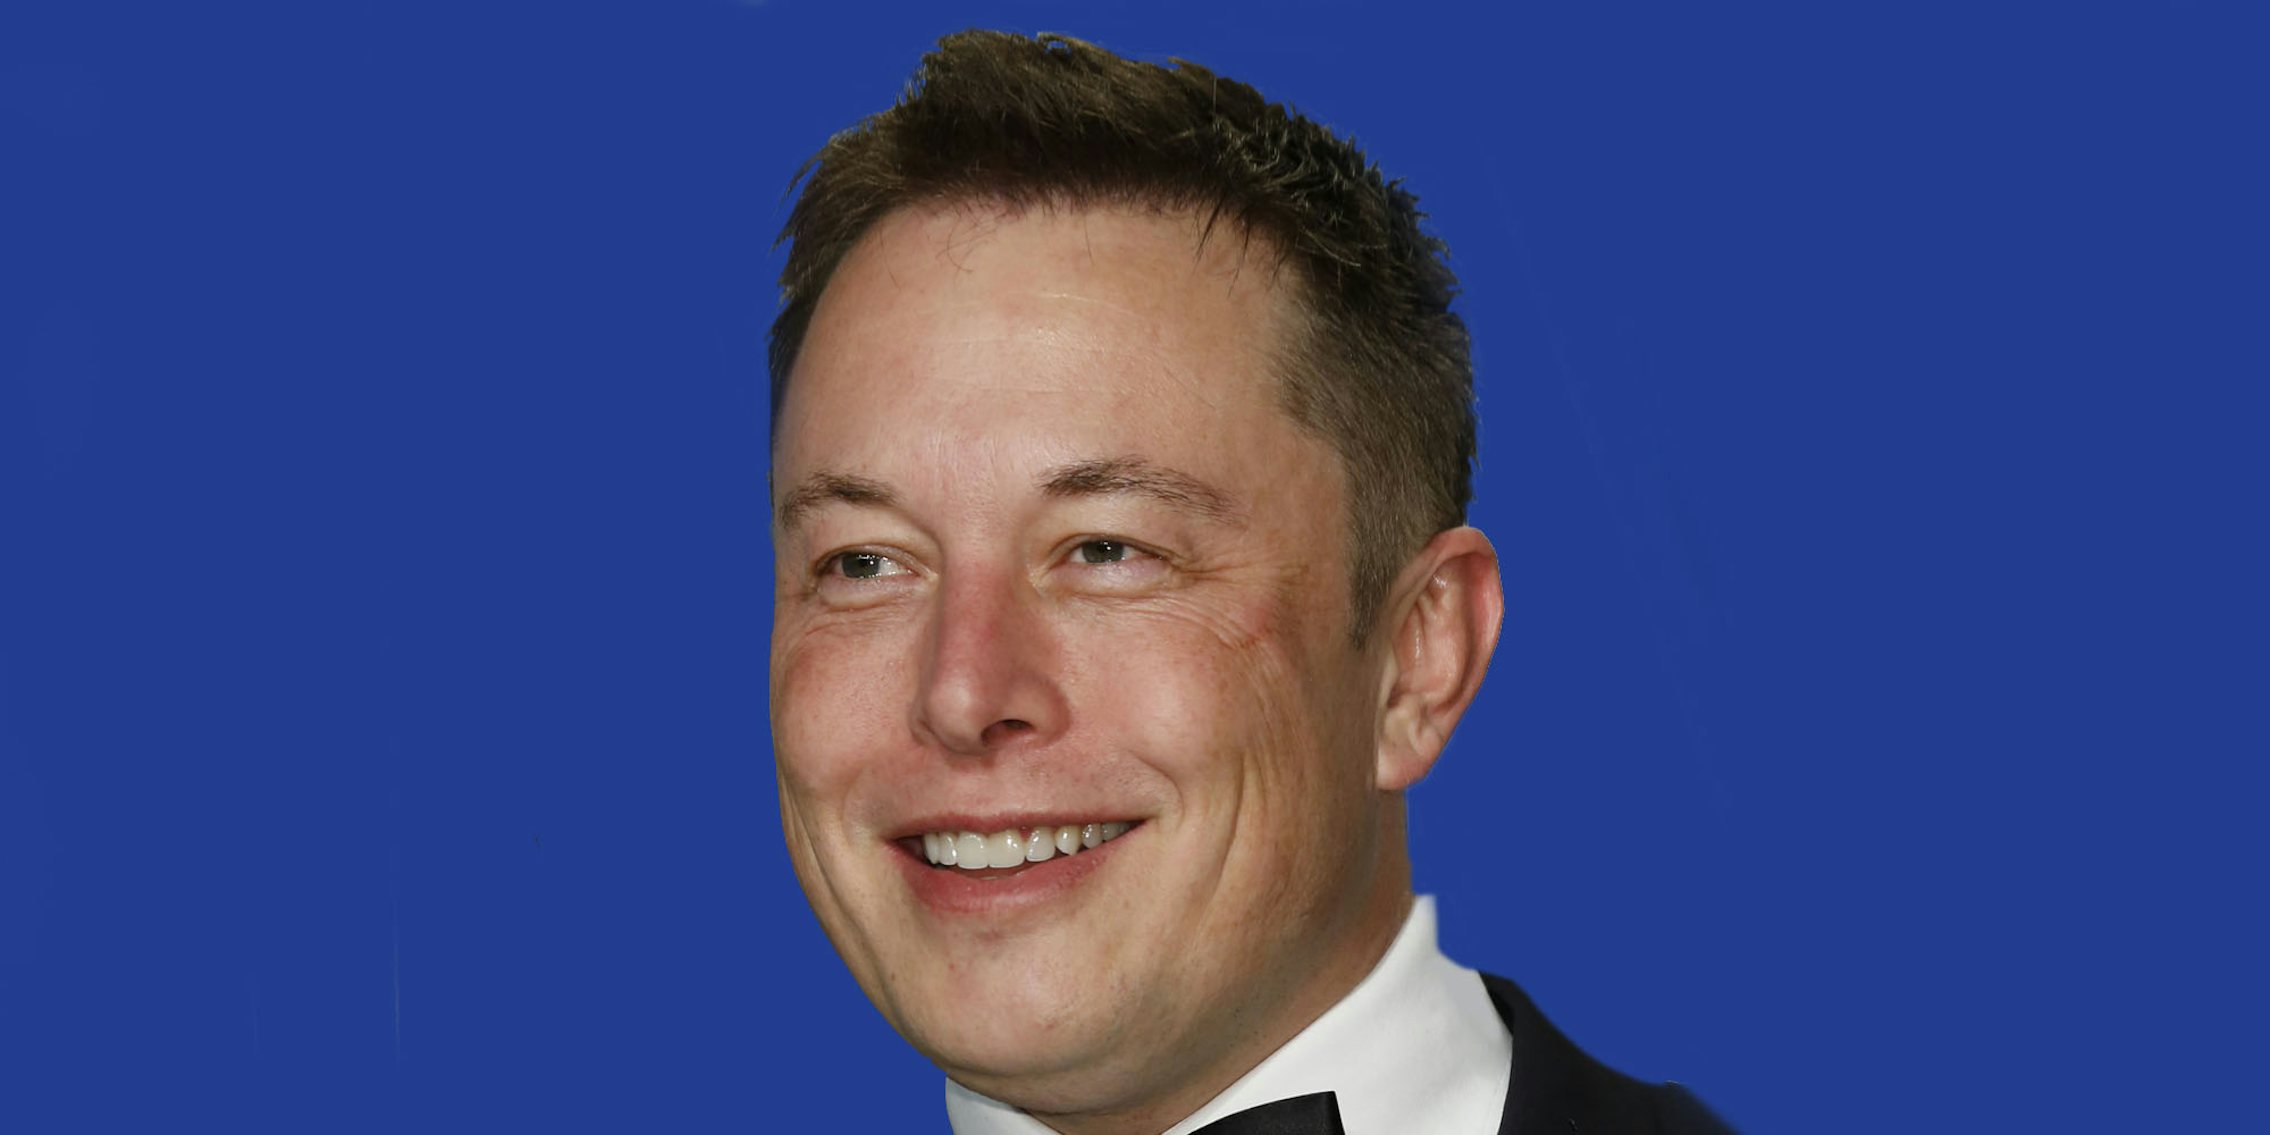 Elon Musk face on blue background